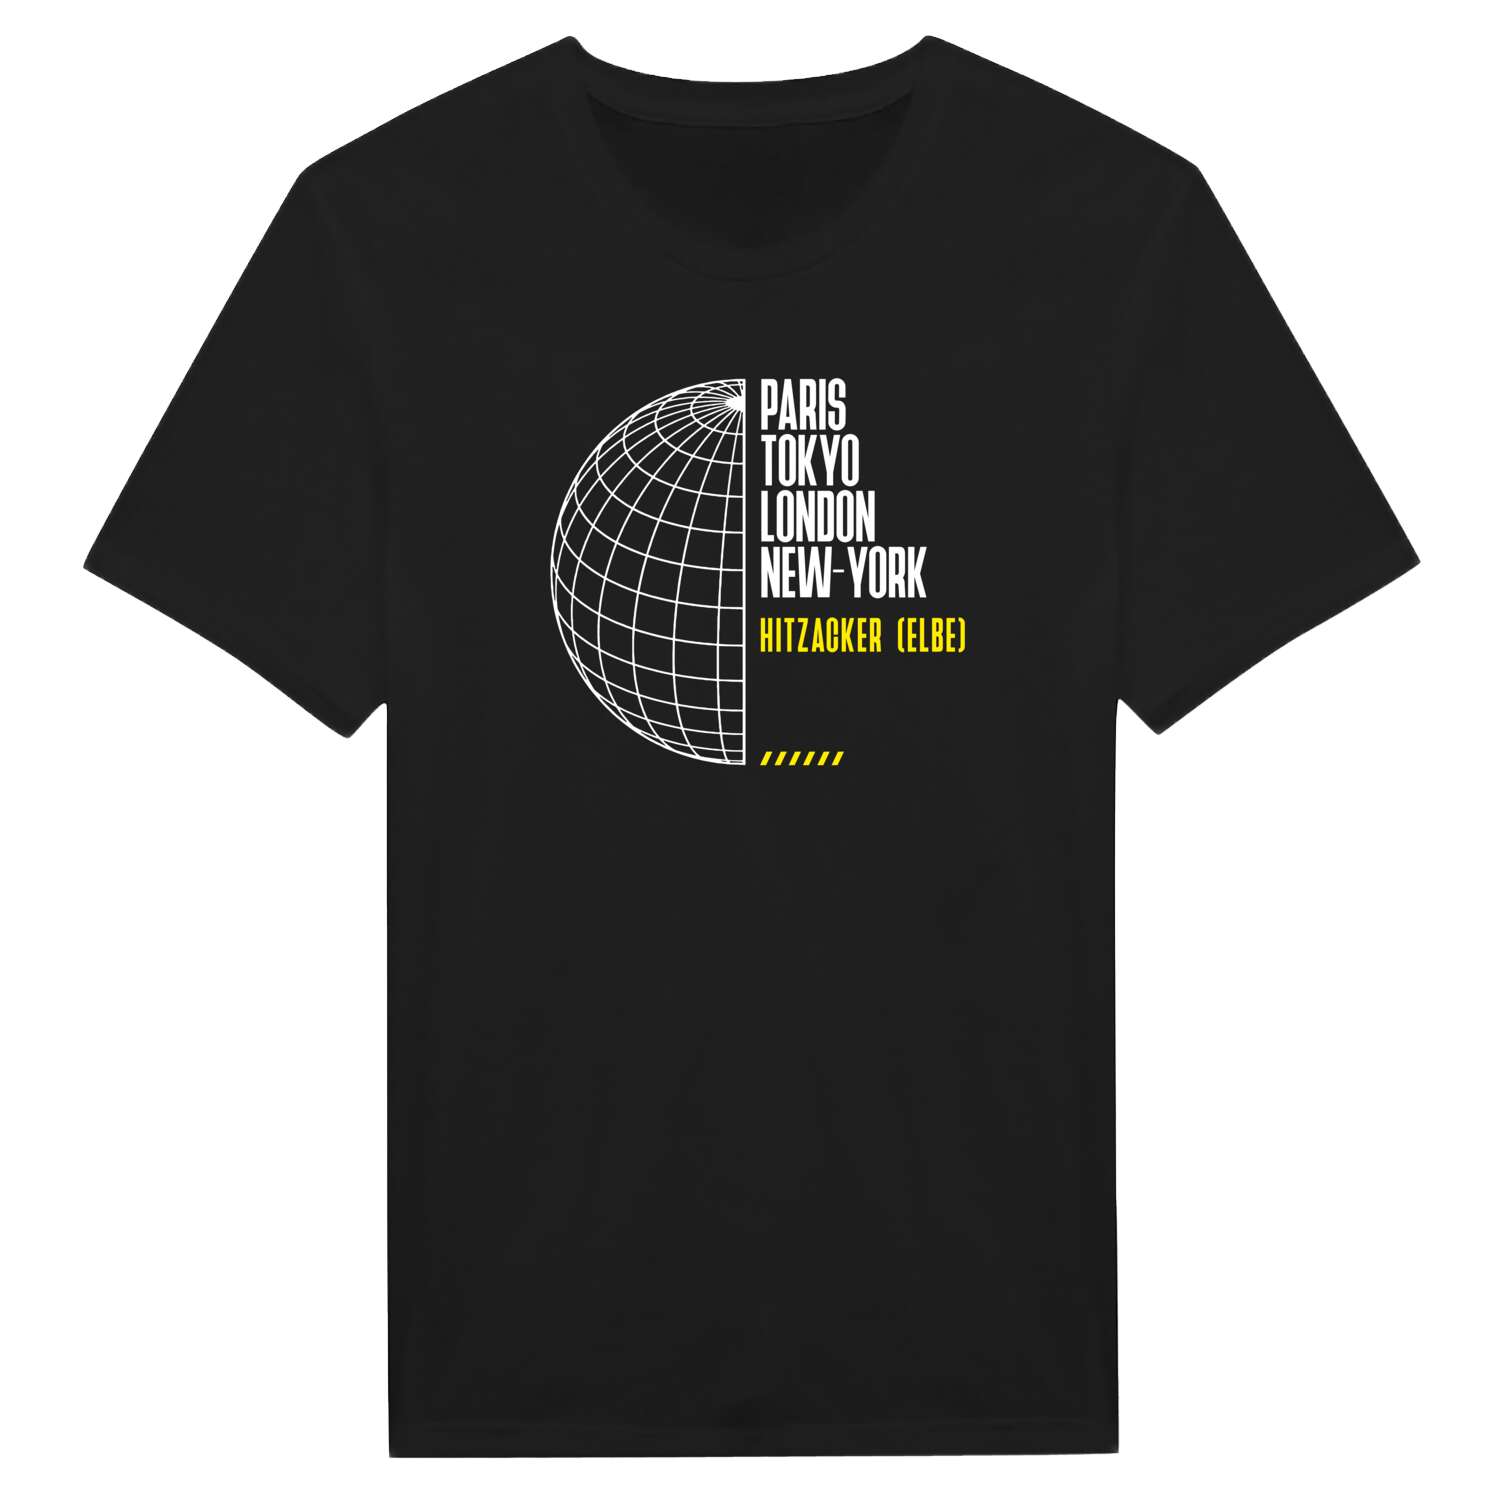 Hitzacker (Elbe) T-Shirt »Paris Tokyo London«